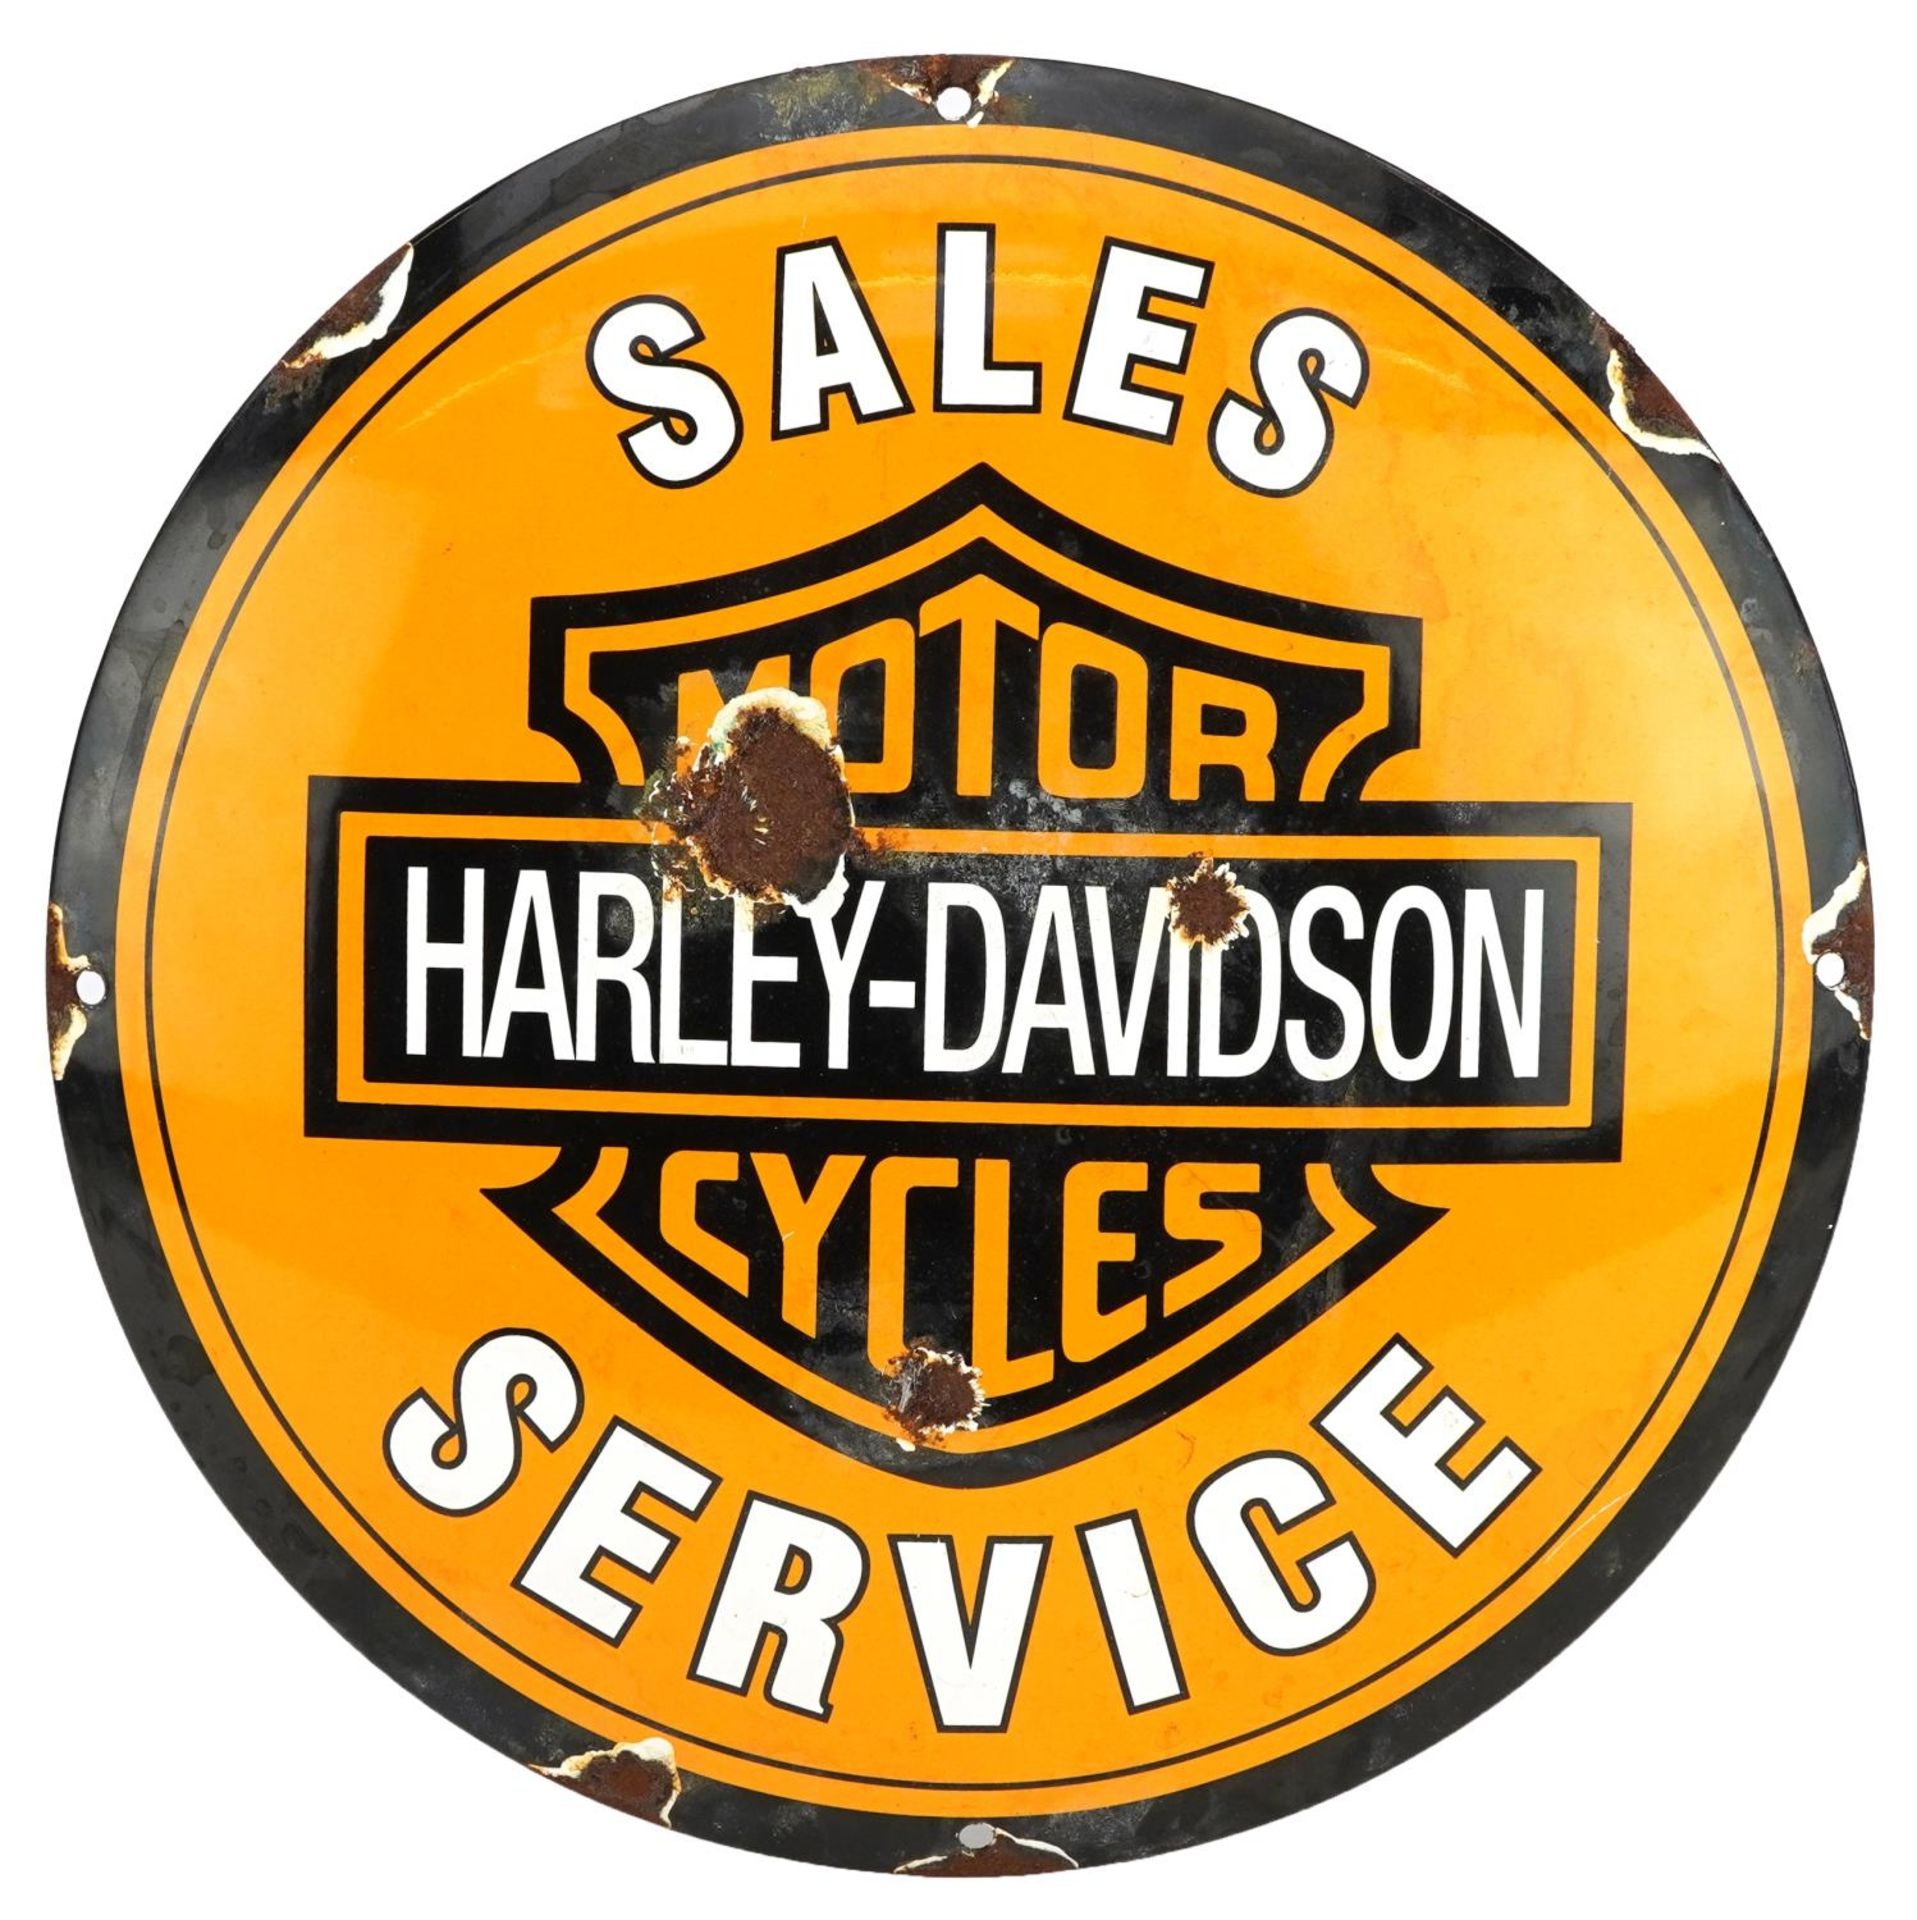 Harley Davidson Motorcycles enamel advertising sign, 30cm in diameter : For further information on